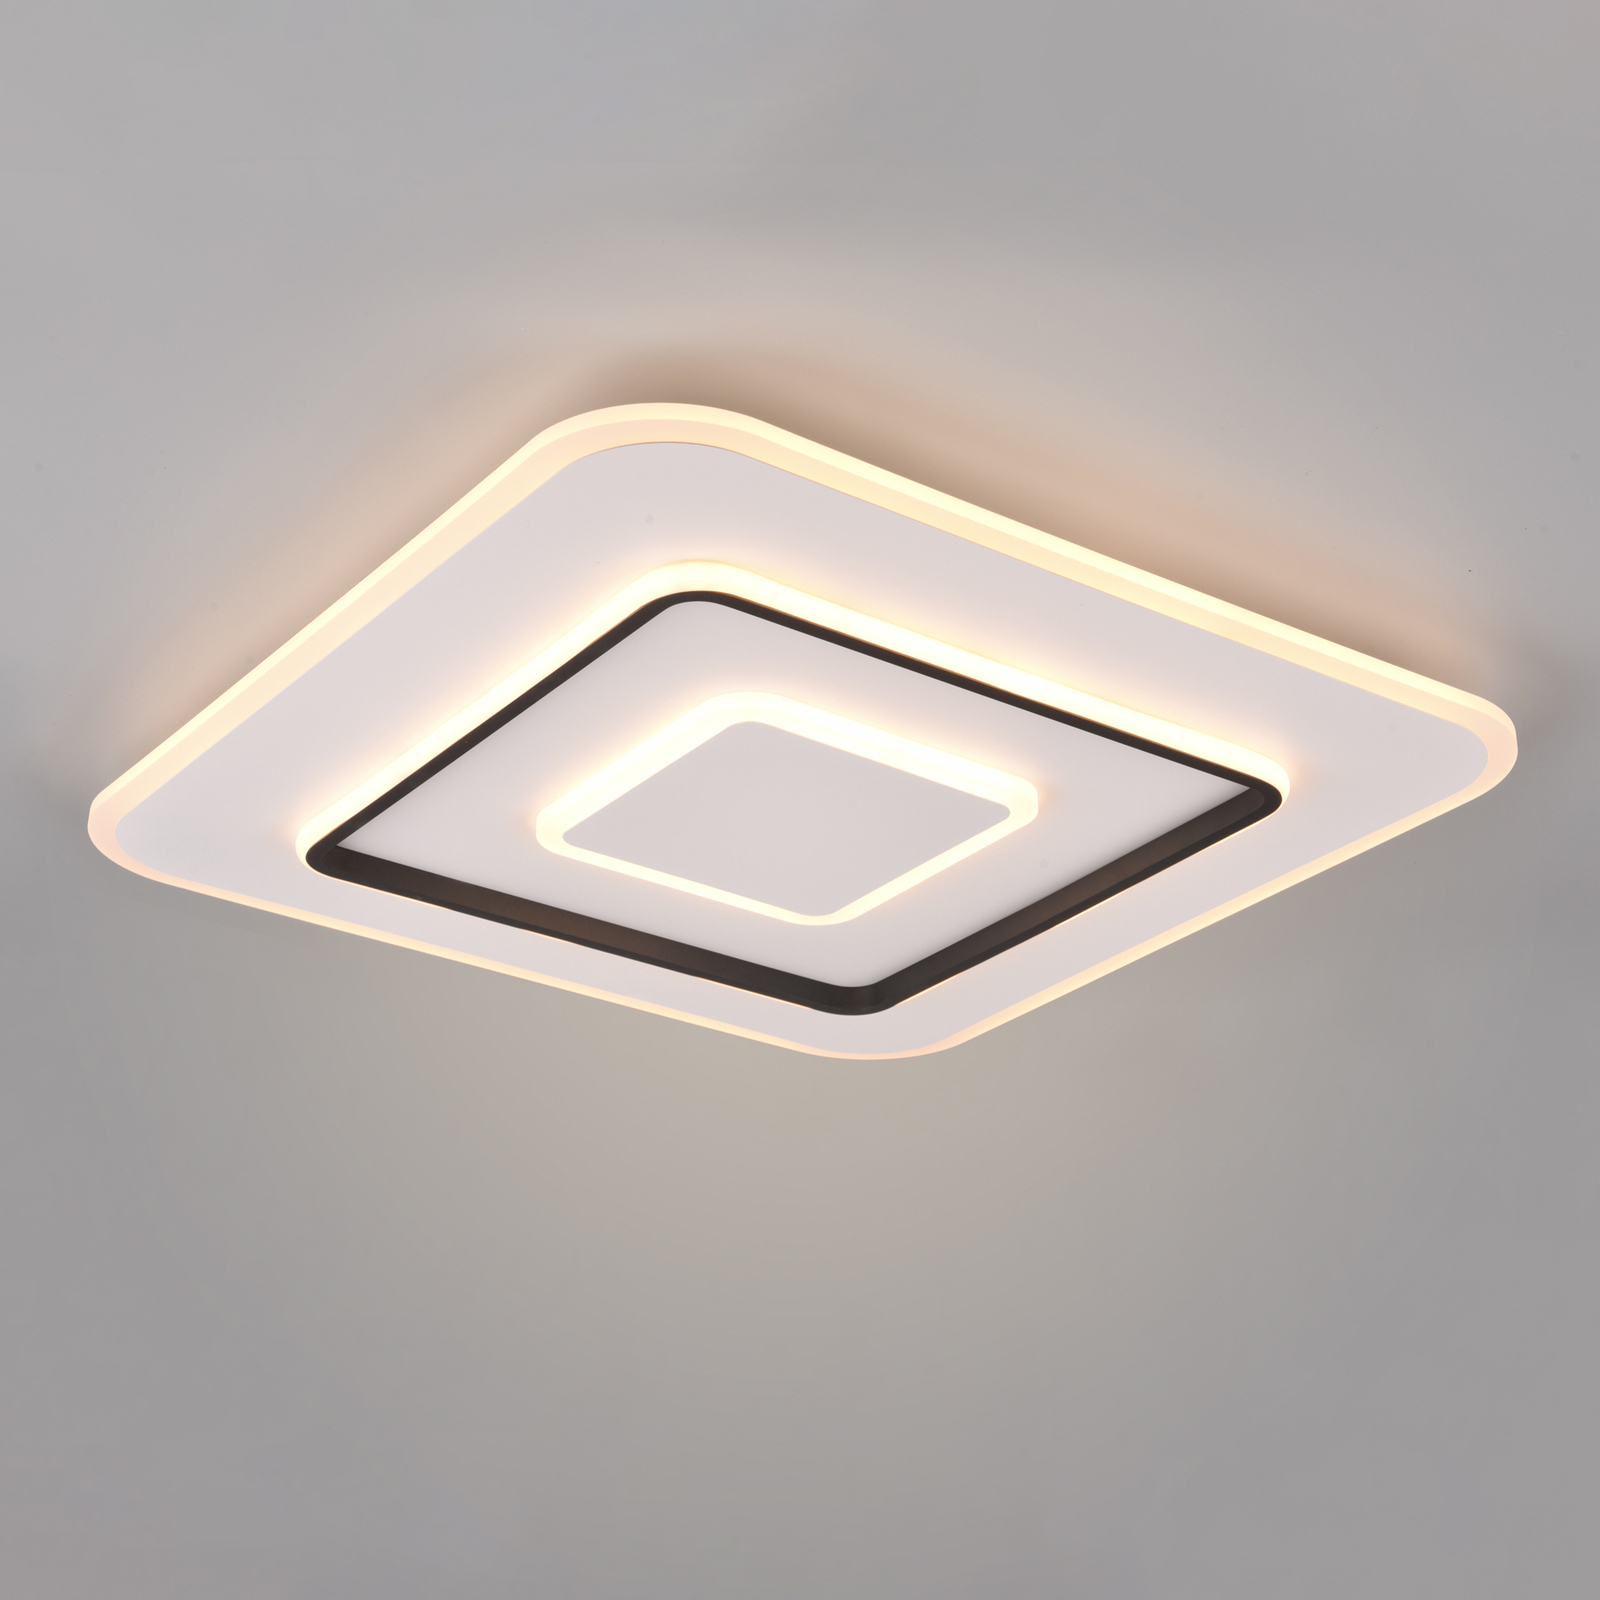 LED-kattovalaisin Jora kulmikas, 60 x 60 cm